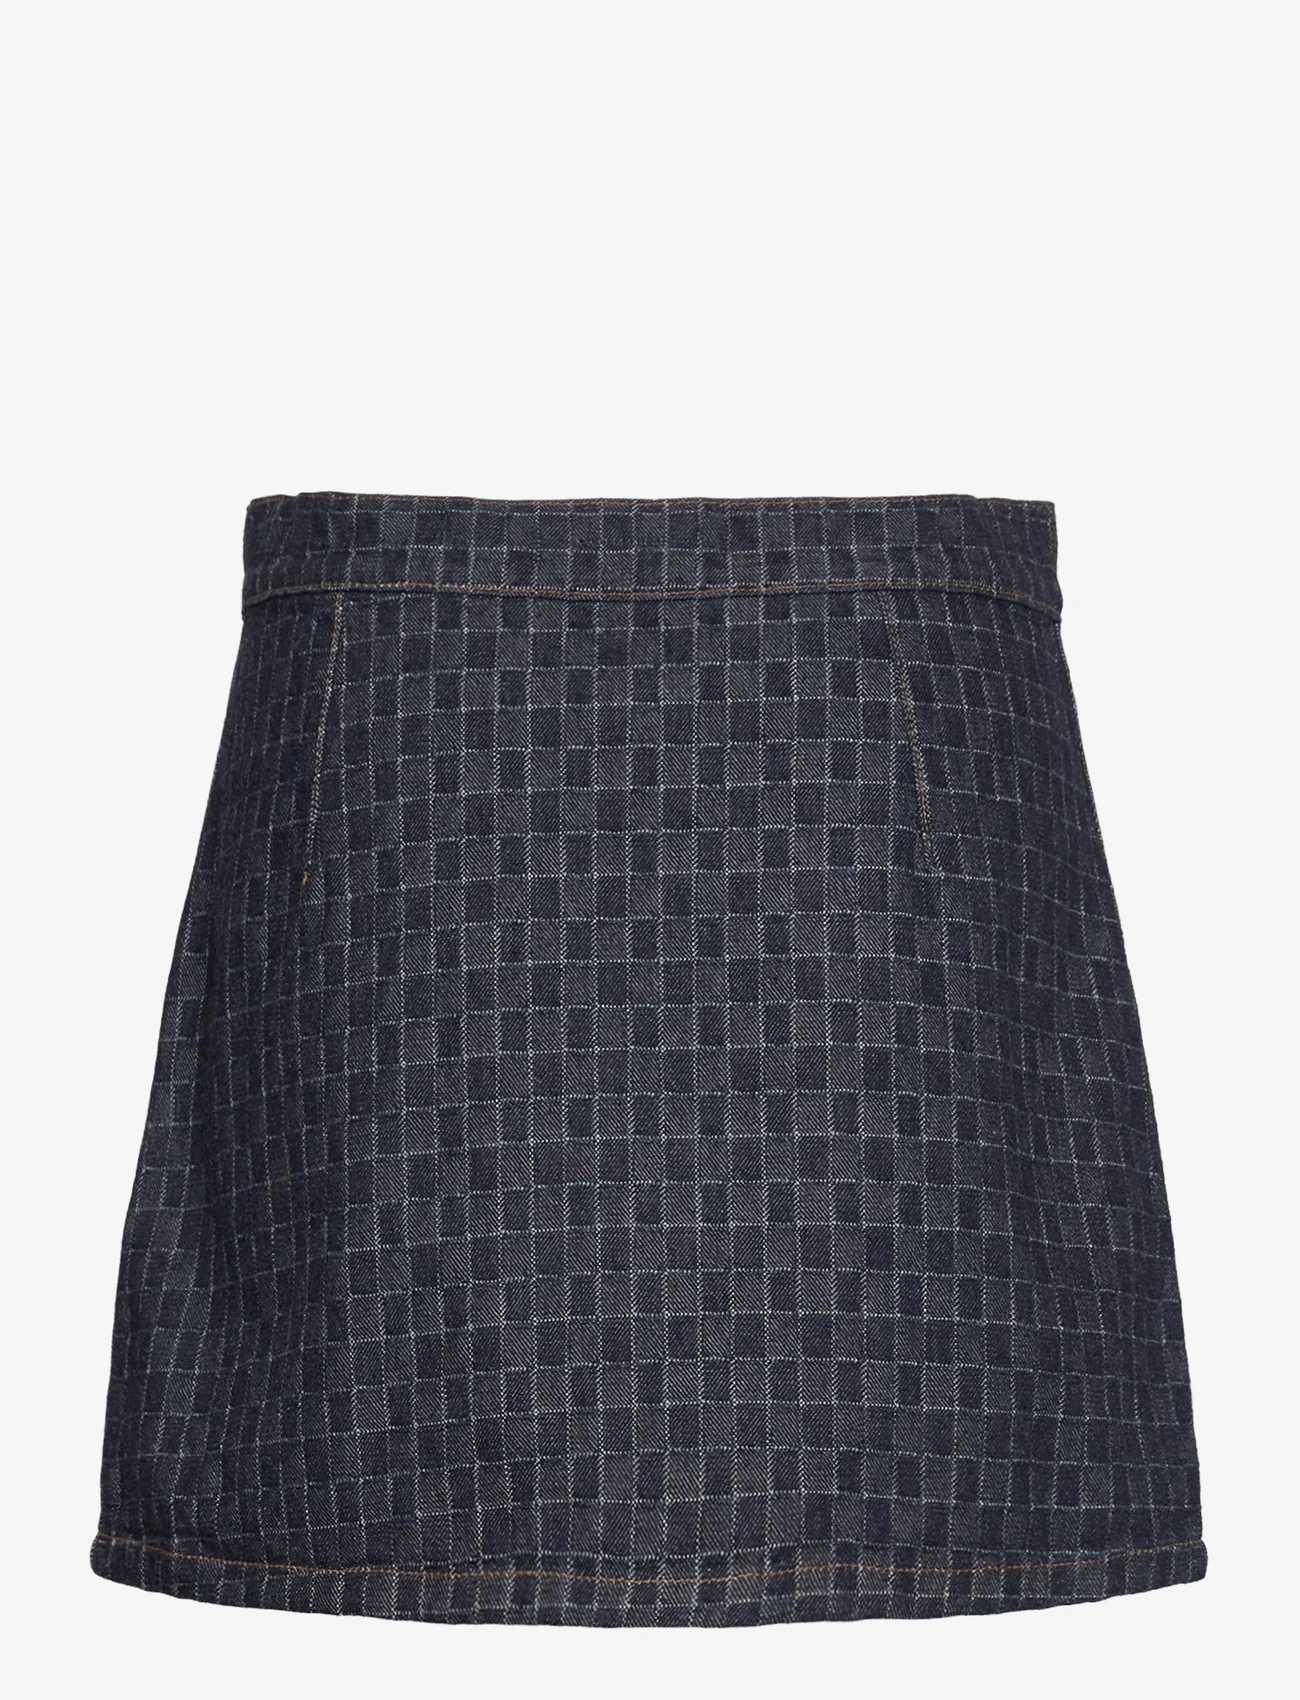 Hope - Brick Skirt Textured Indigo - trumpi sijonai - textured indigo - 1